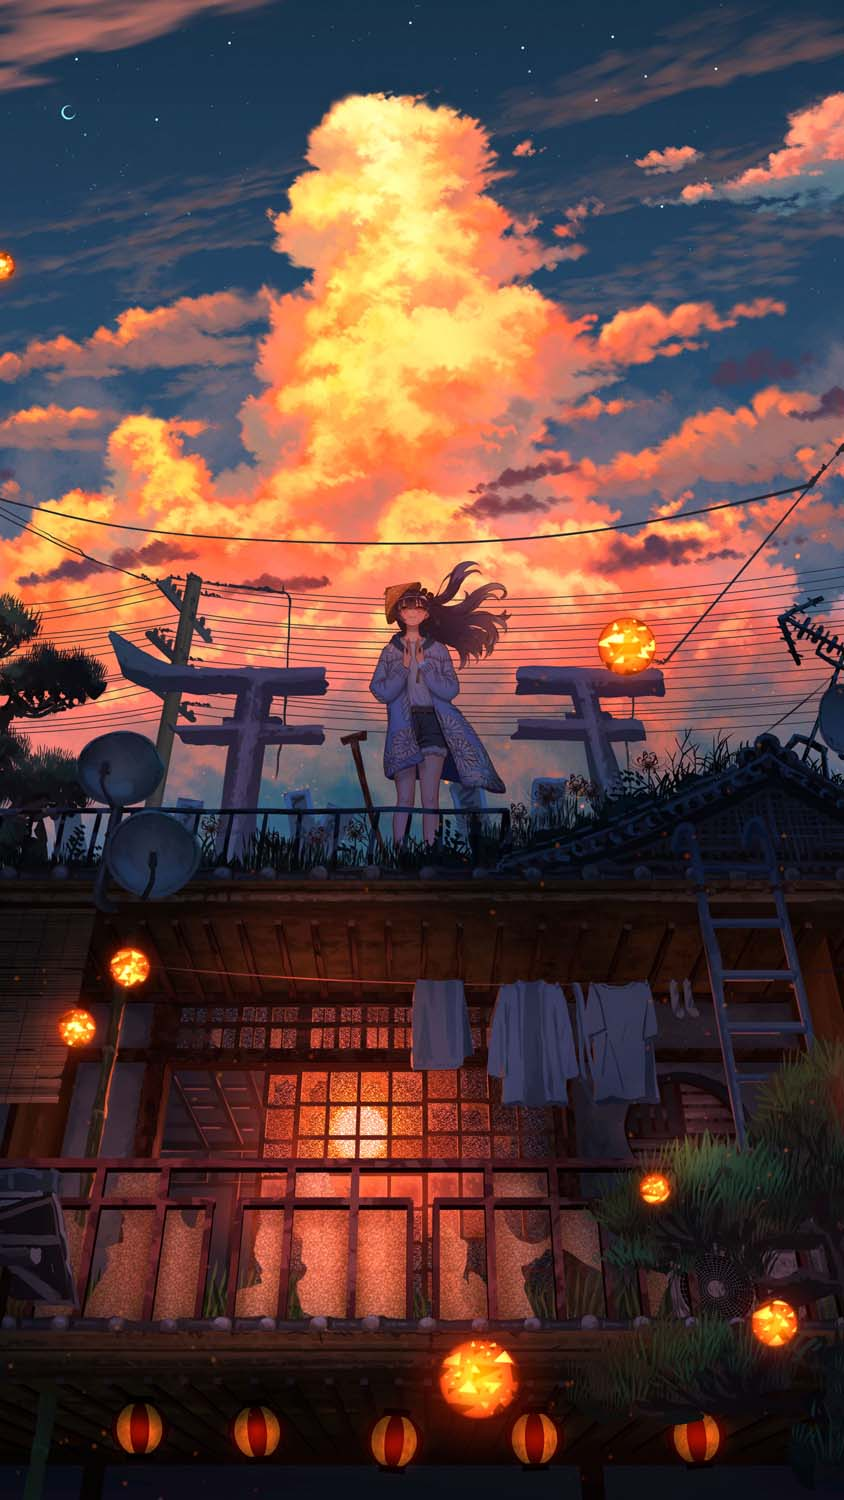 4K Wallpaper for PC  Artwork Clouds Rocks Anime Sky